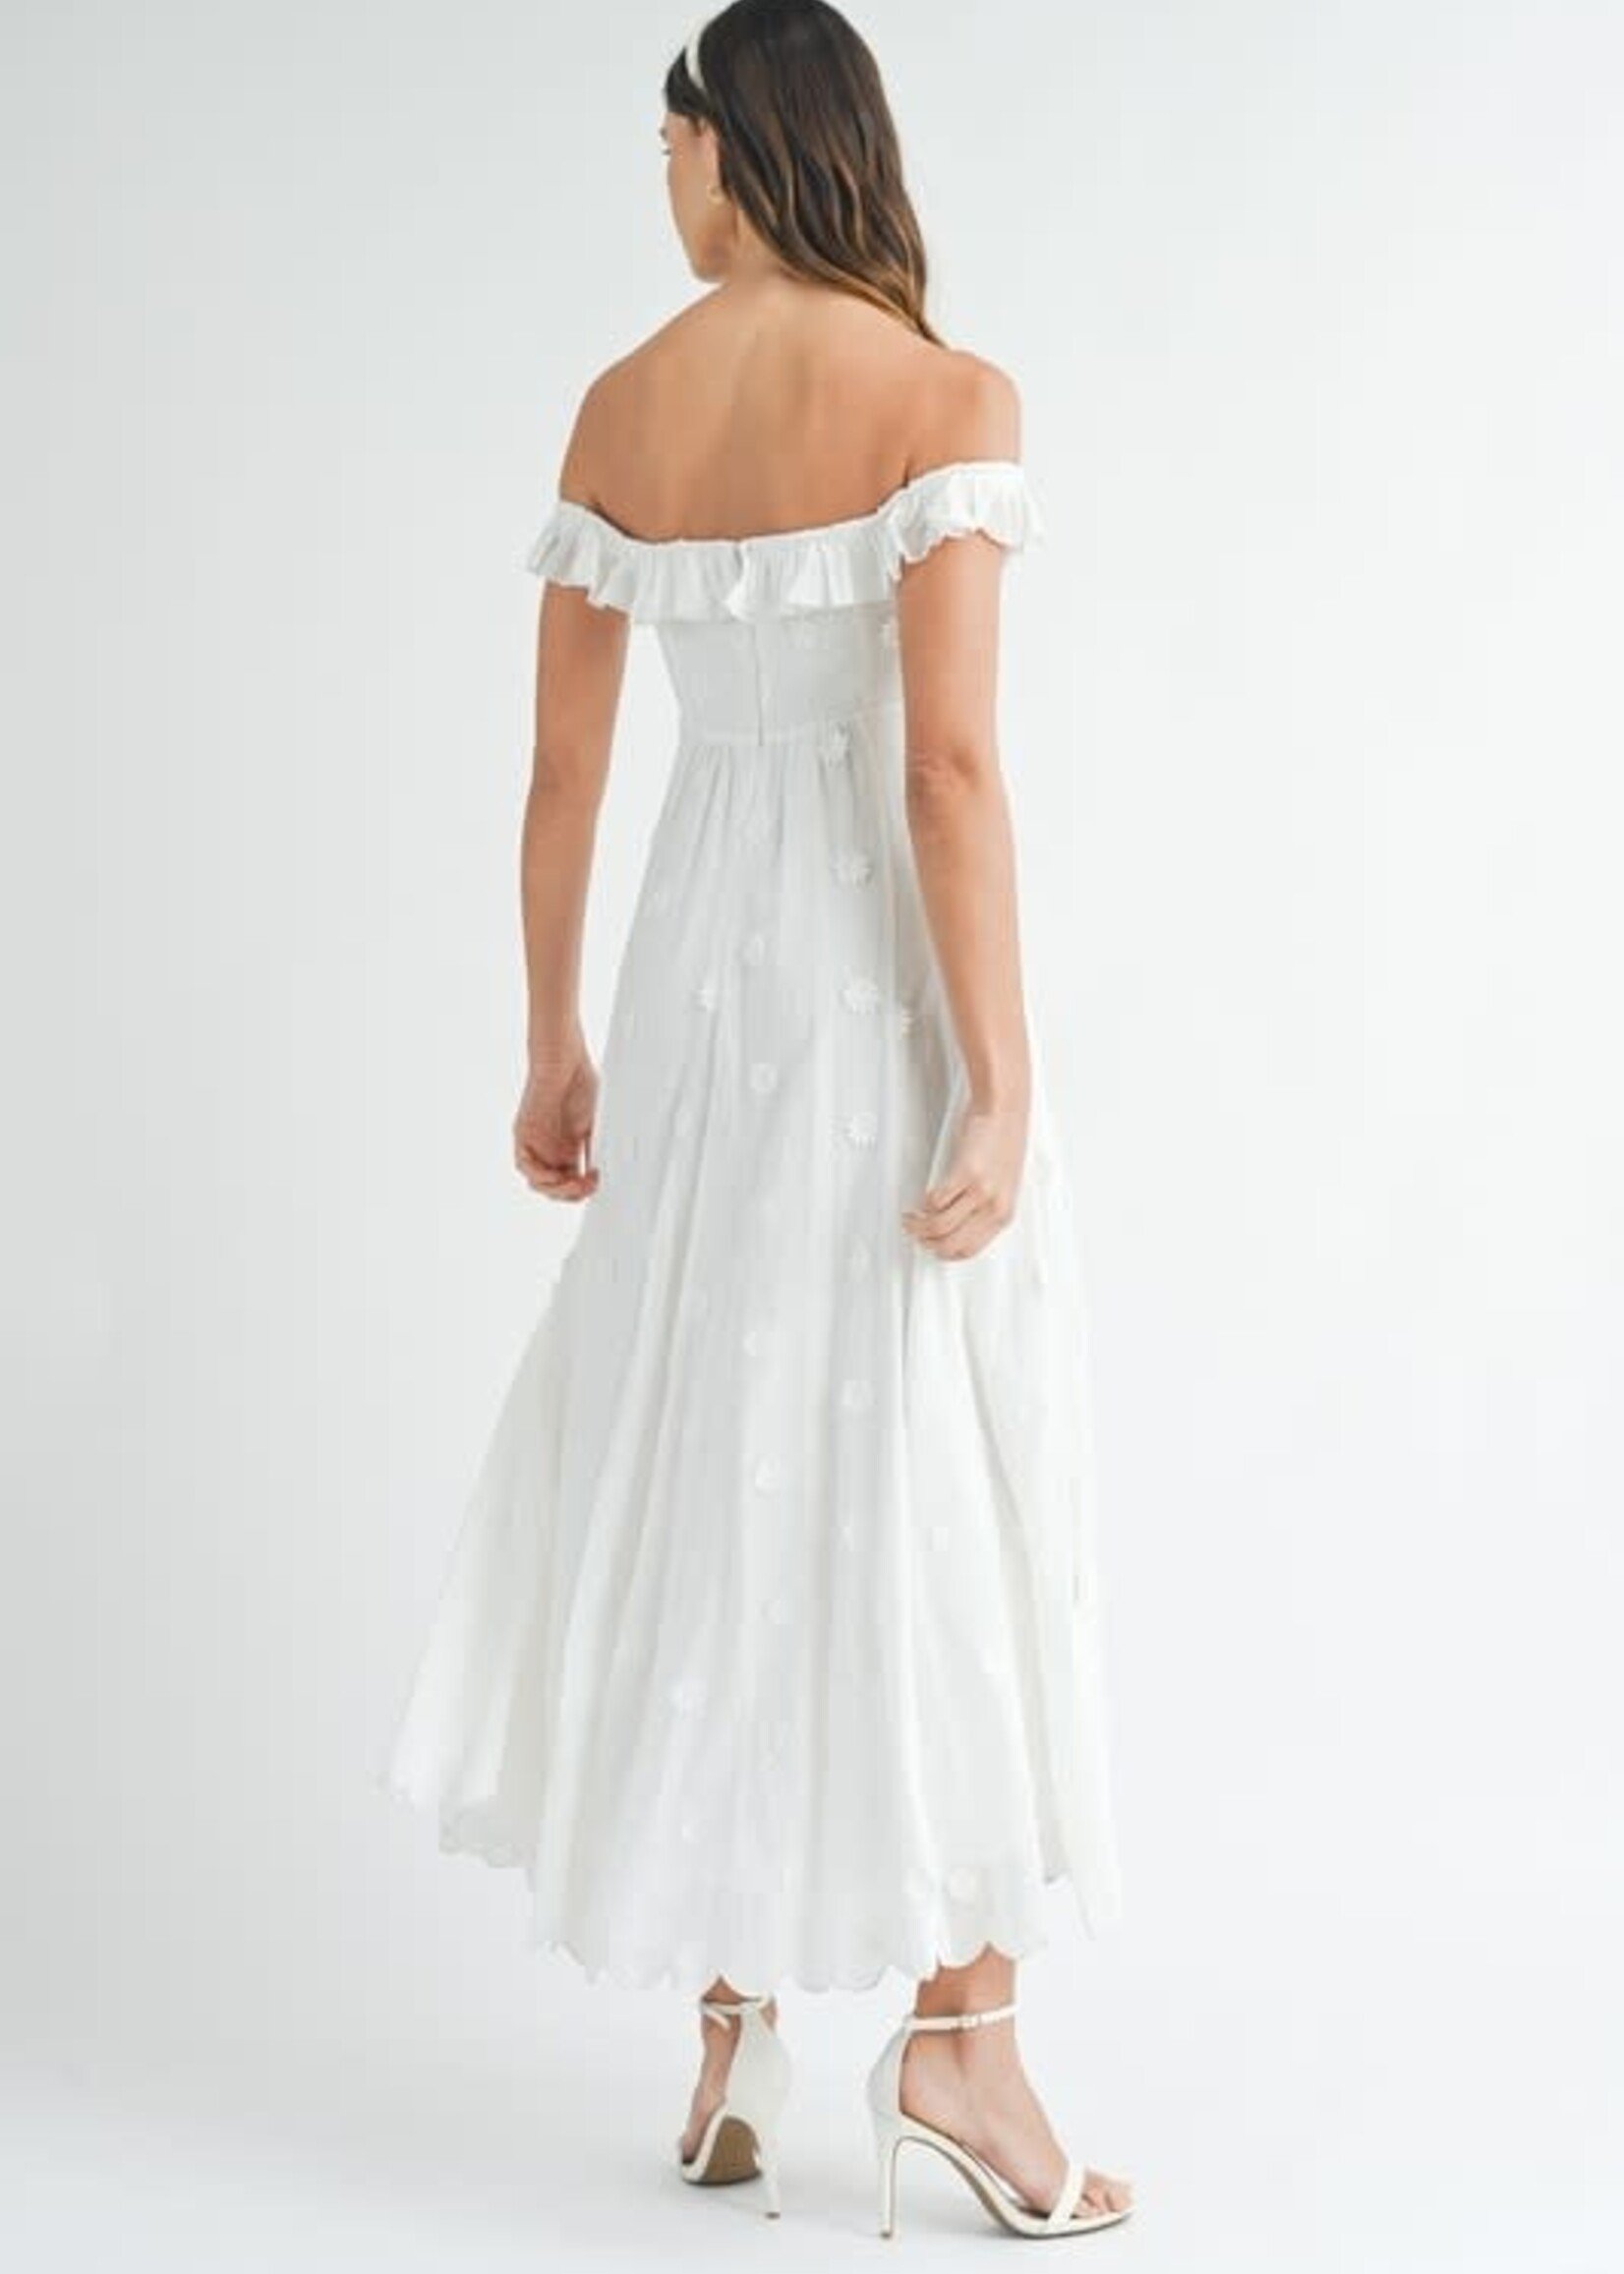 One Wish White Floral Midi Dress